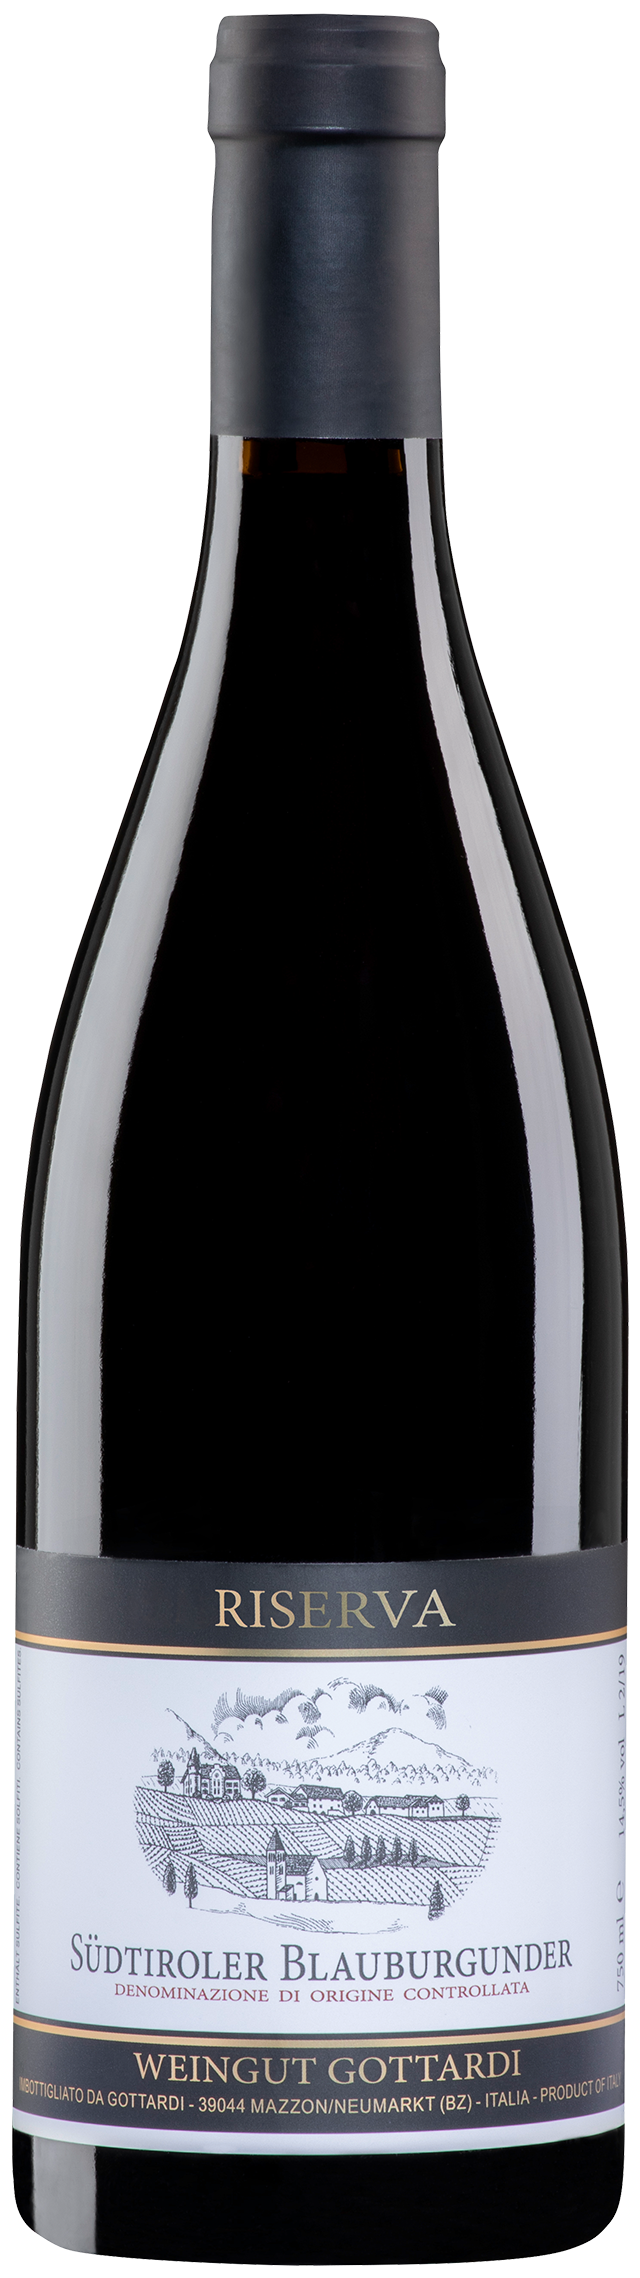 Pinot Nero Alto Adige Mazzon 2016 Riserva - Weingut Gottardi Mazzon